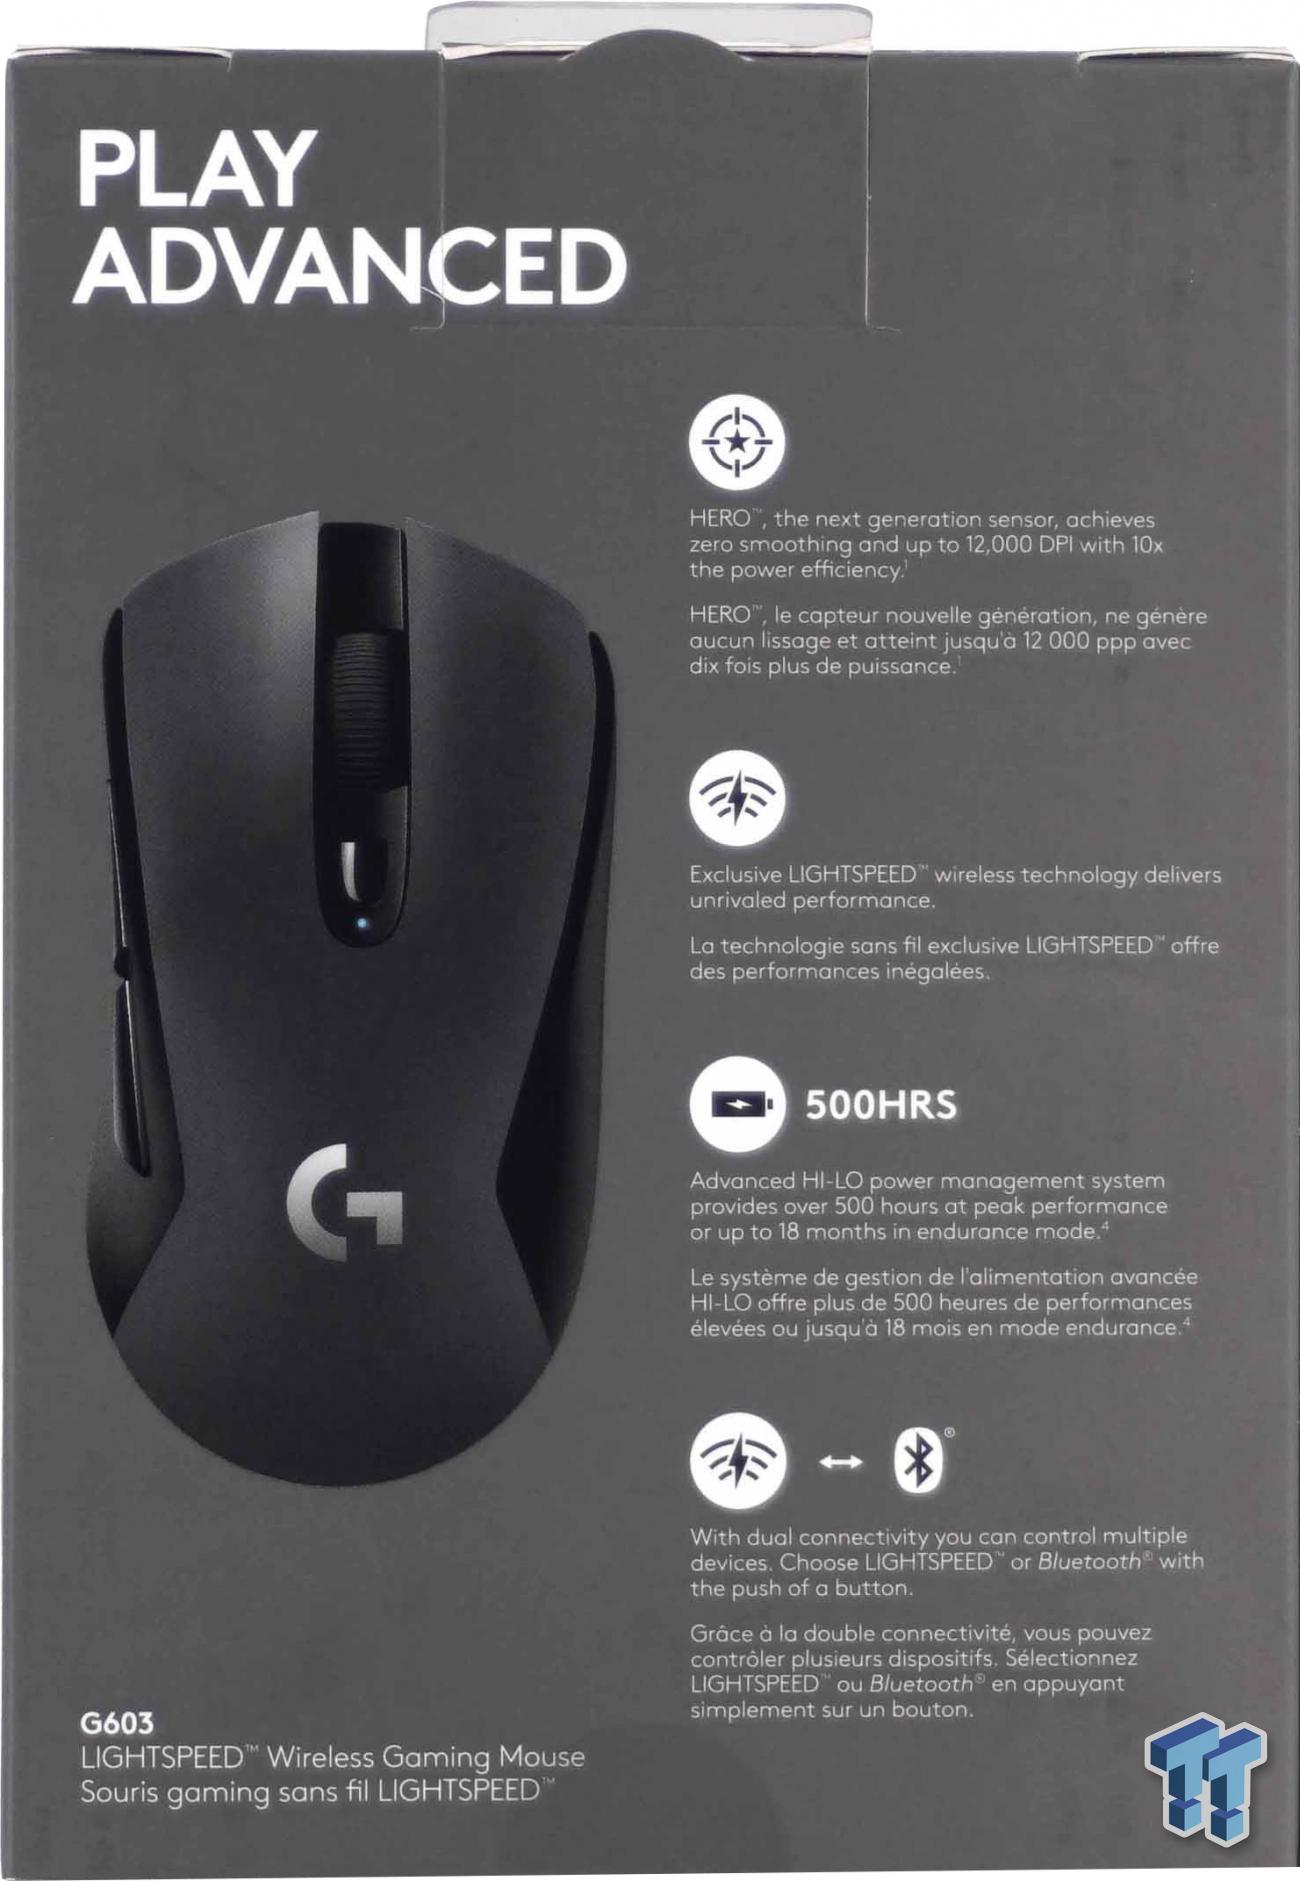 Logitech G603 Lightspeed Wireless Gaming Mouse Review